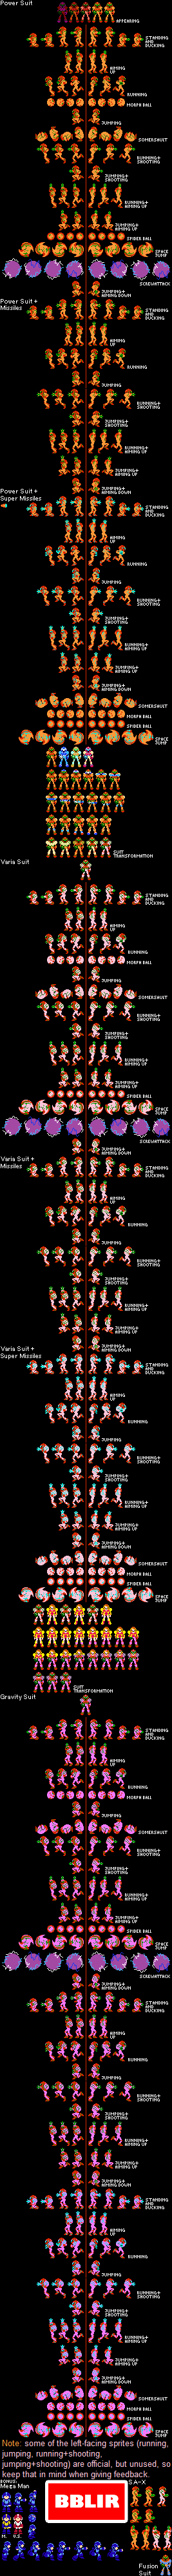 Metroid Customs - Samus (NES-Style, Expanded)